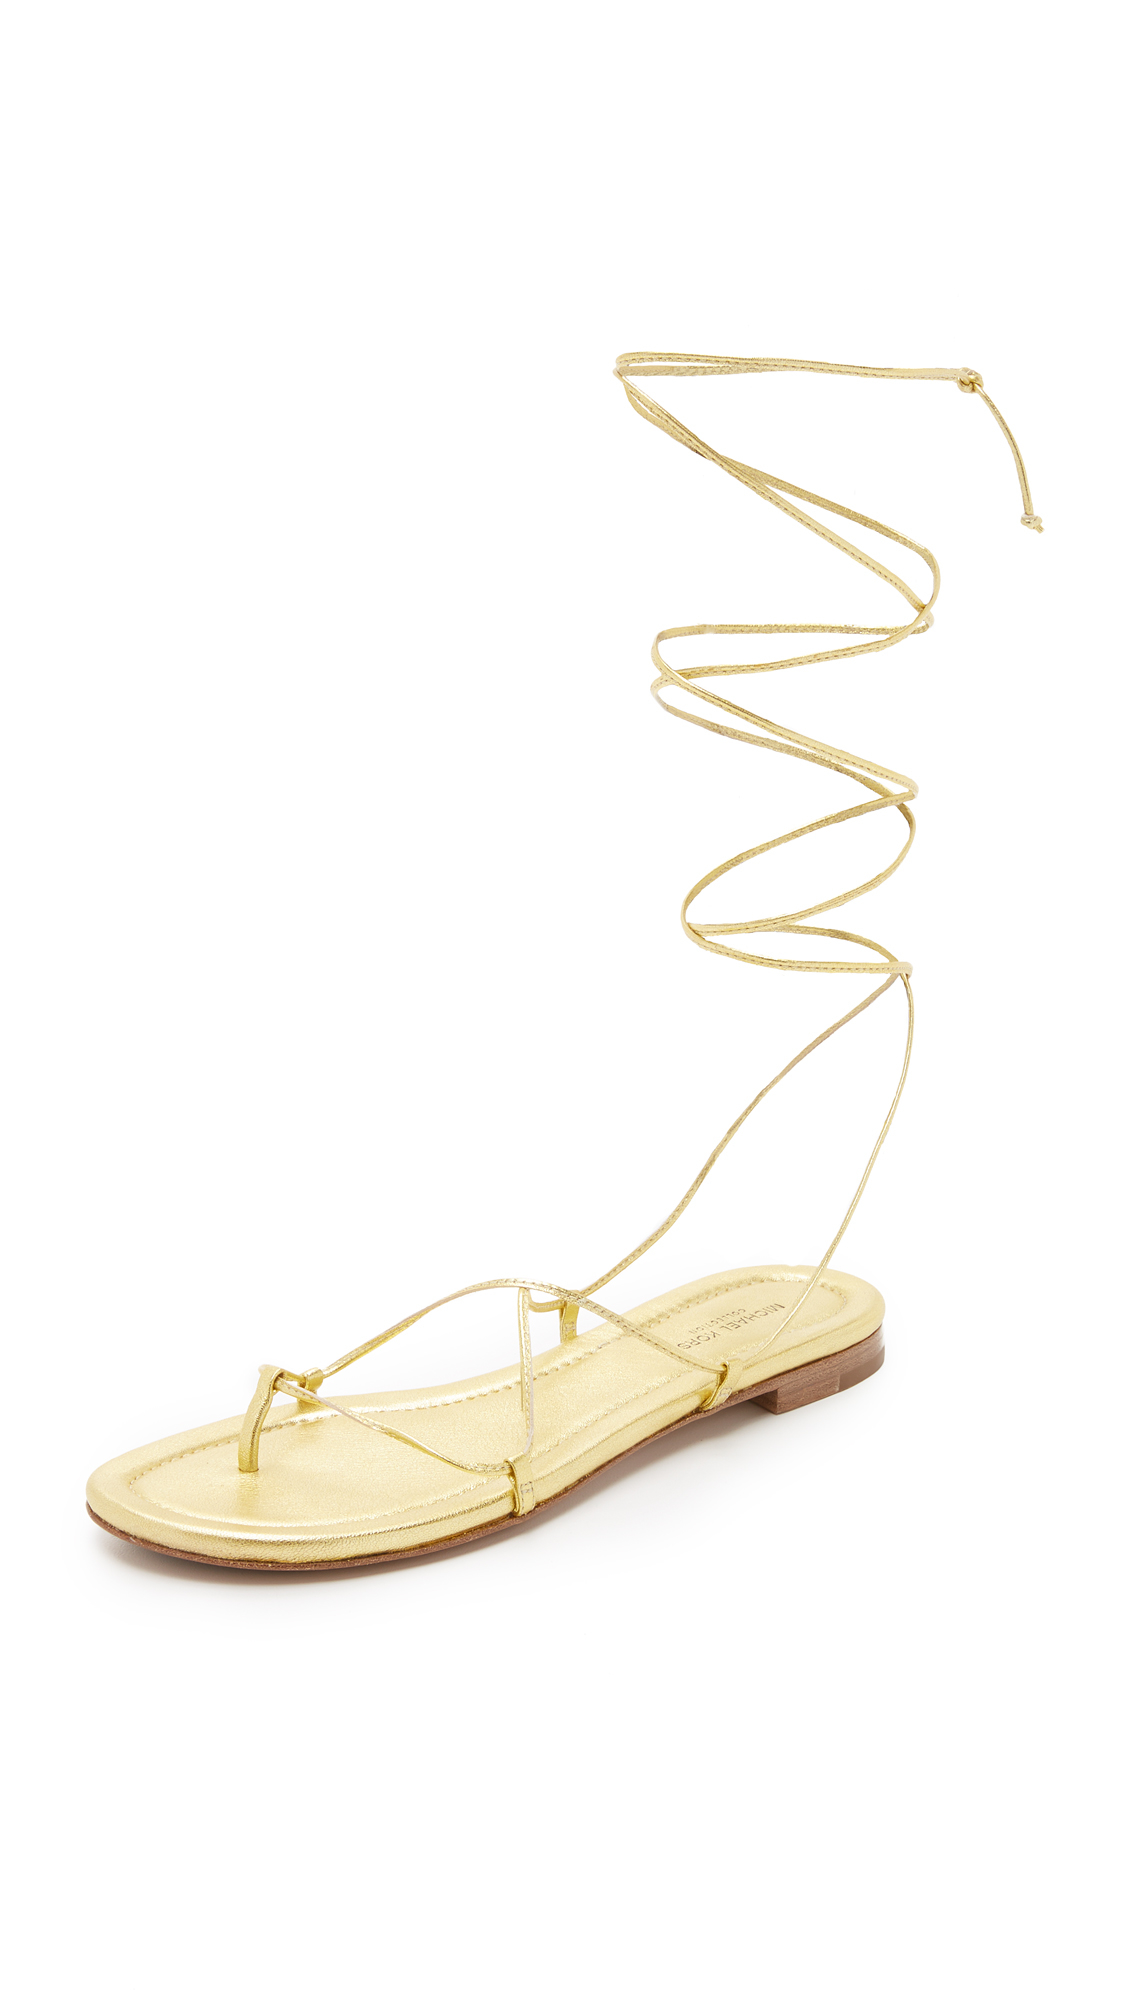 Michael Kors Bradshaw Lace Up Sandals in Metallic | Lyst